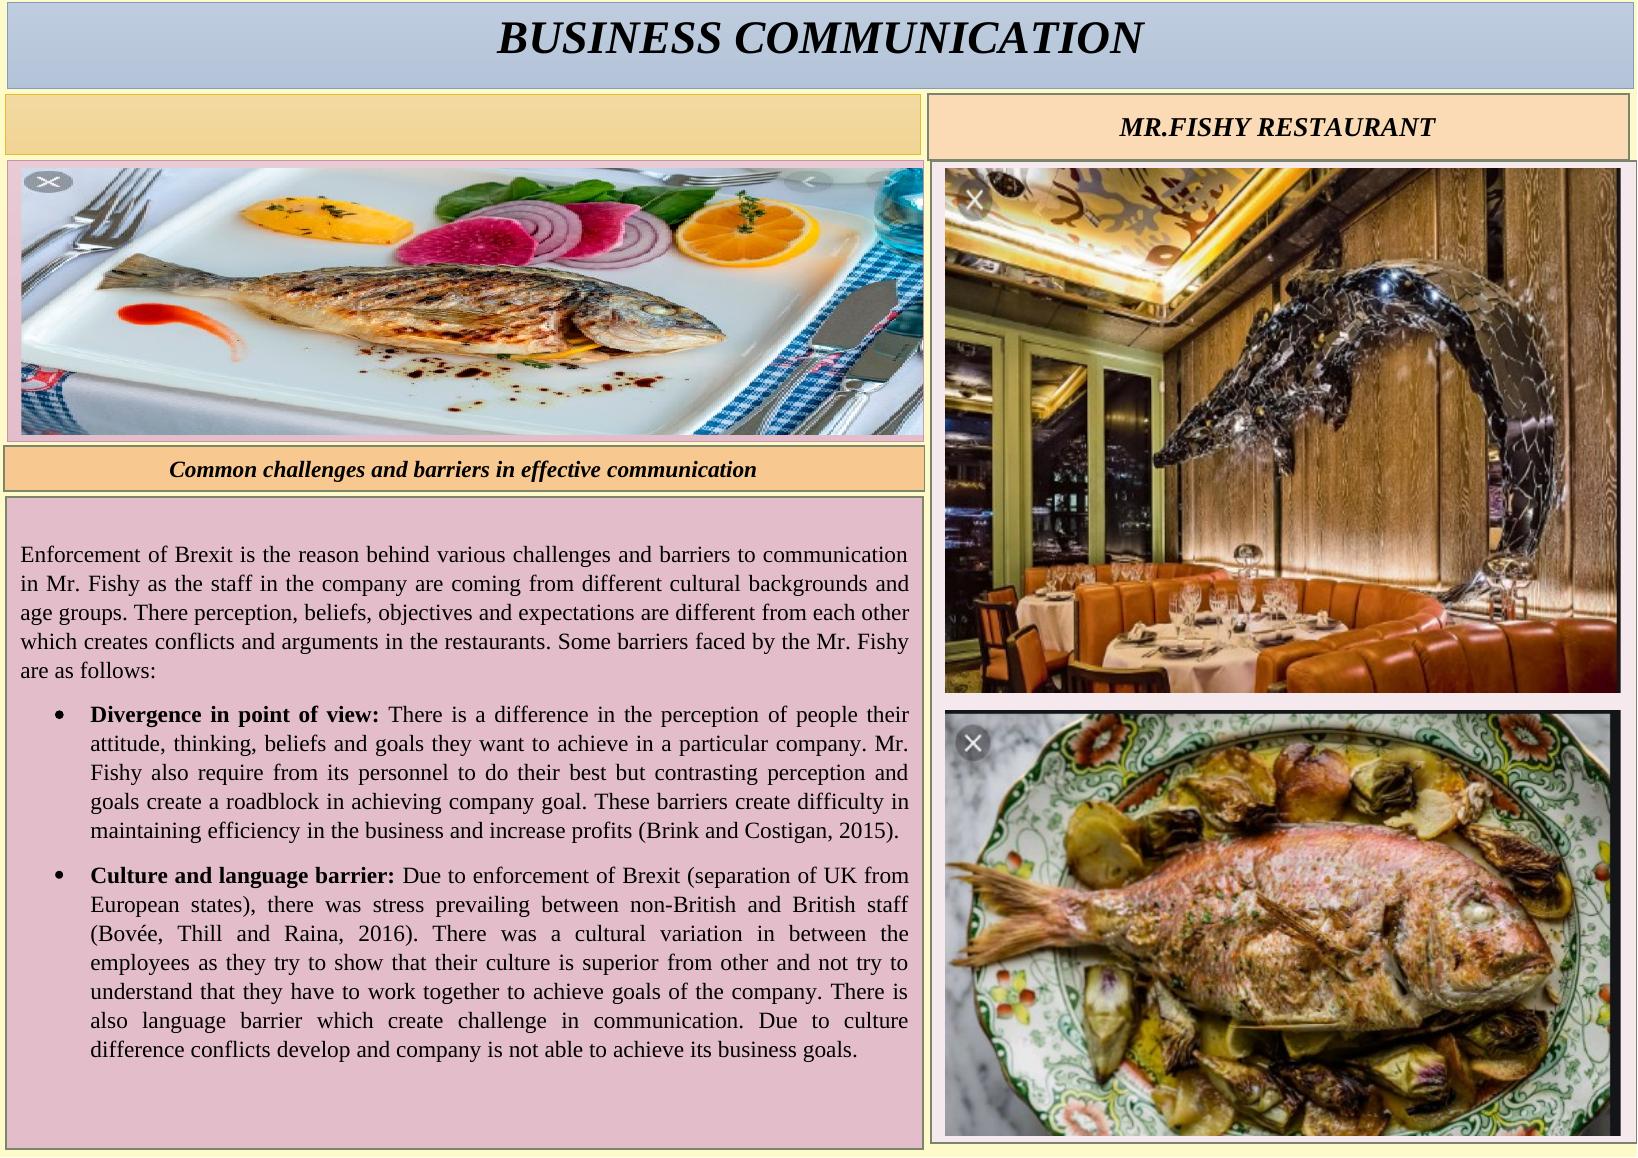 Business Communication - Mr Fishy Restaurant_1